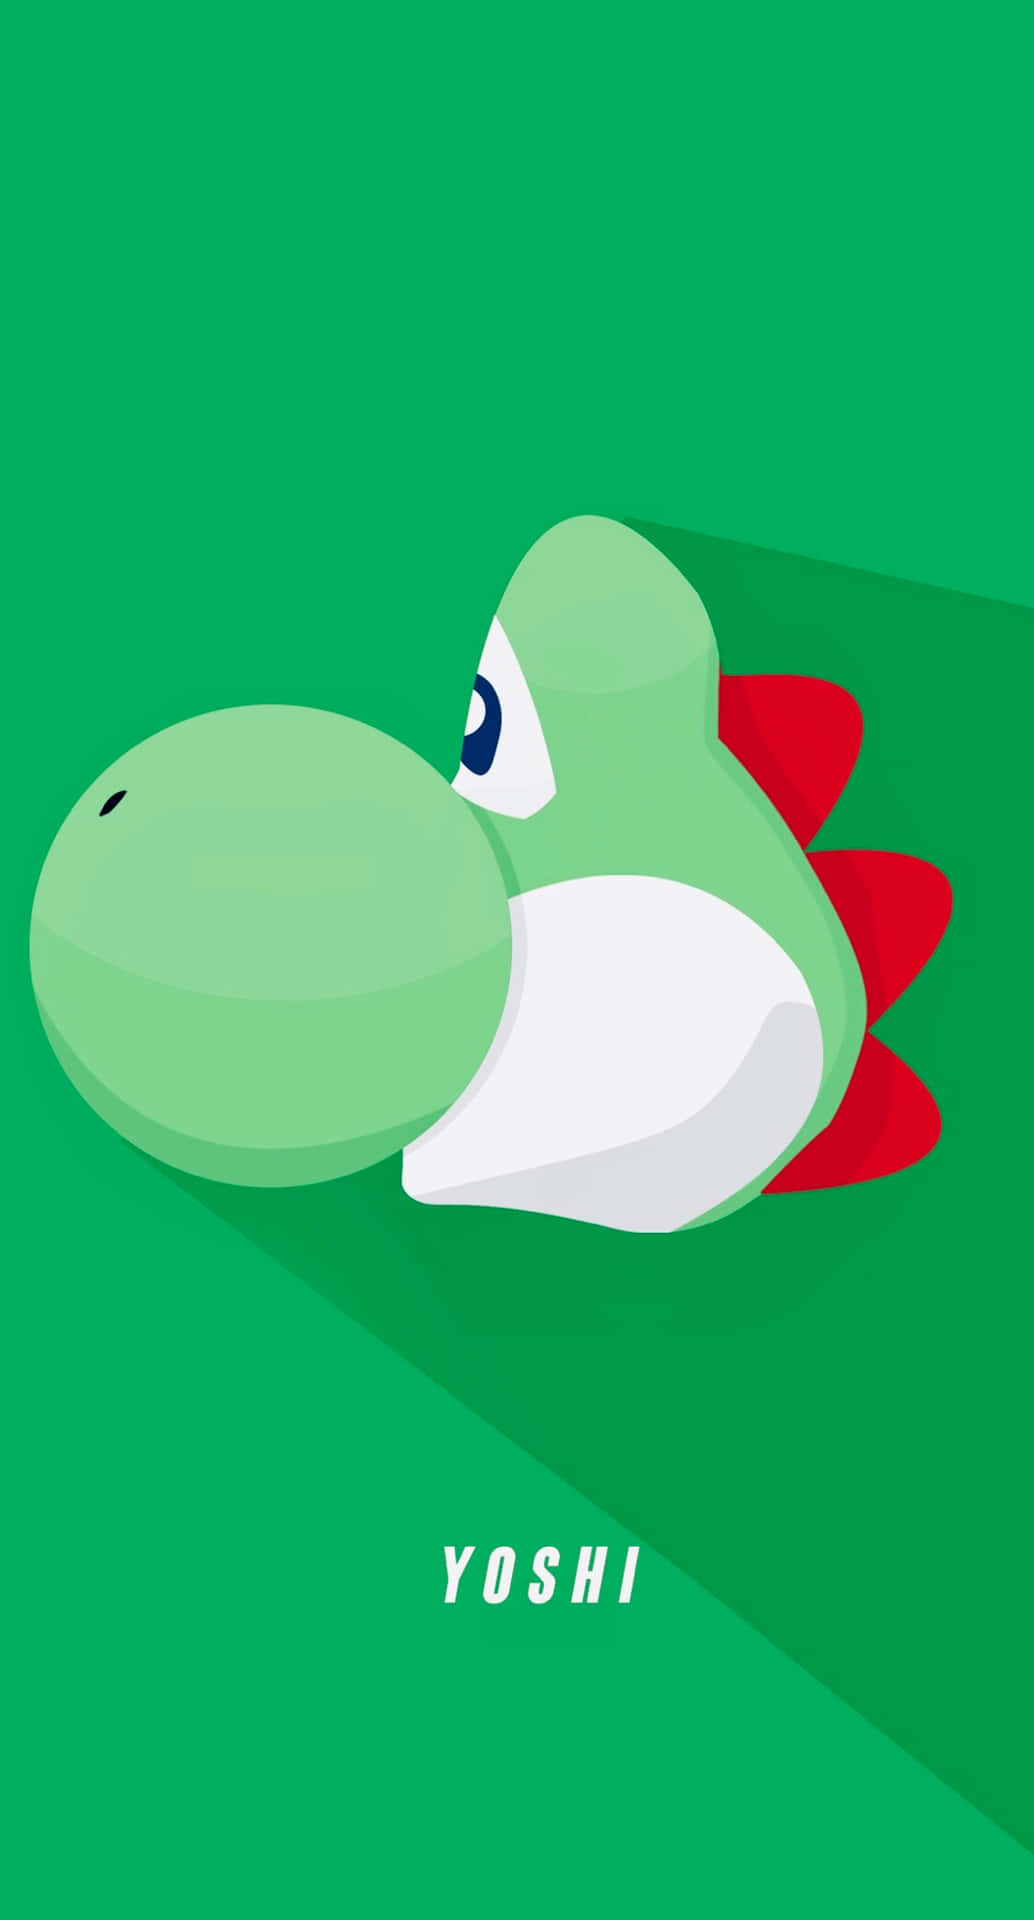 Unfondo Verde Con Un Personaje De Yoshi En Él. Fondo de pantalla